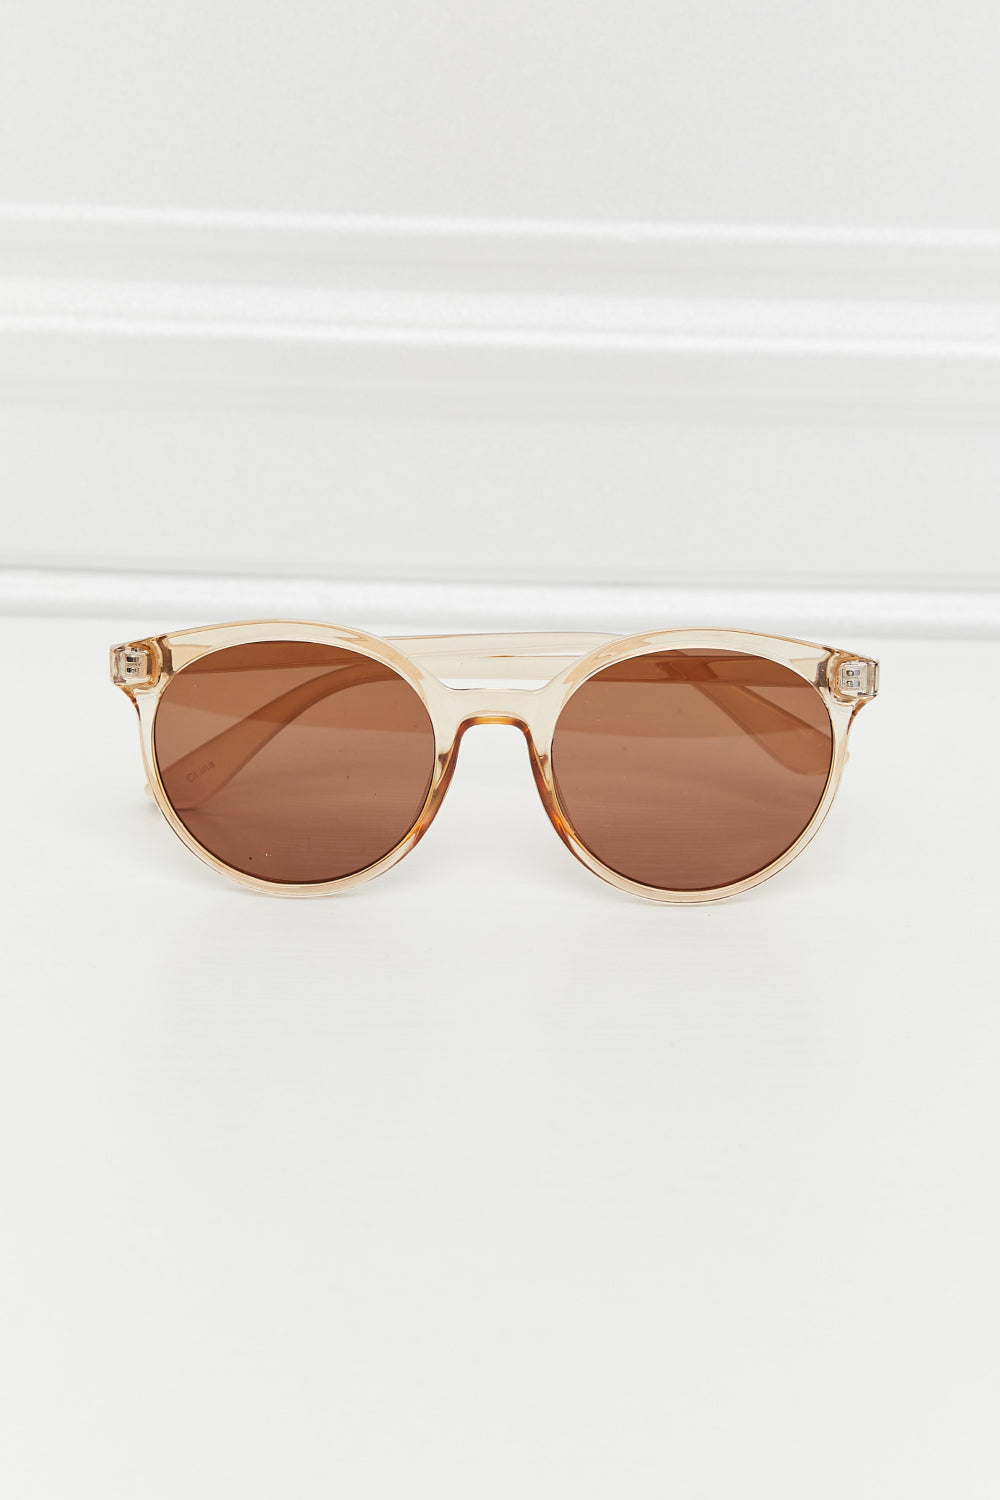 Round Full Rim Polycarbonate Frame Sunglasses - Sunglasses - FITGGINS